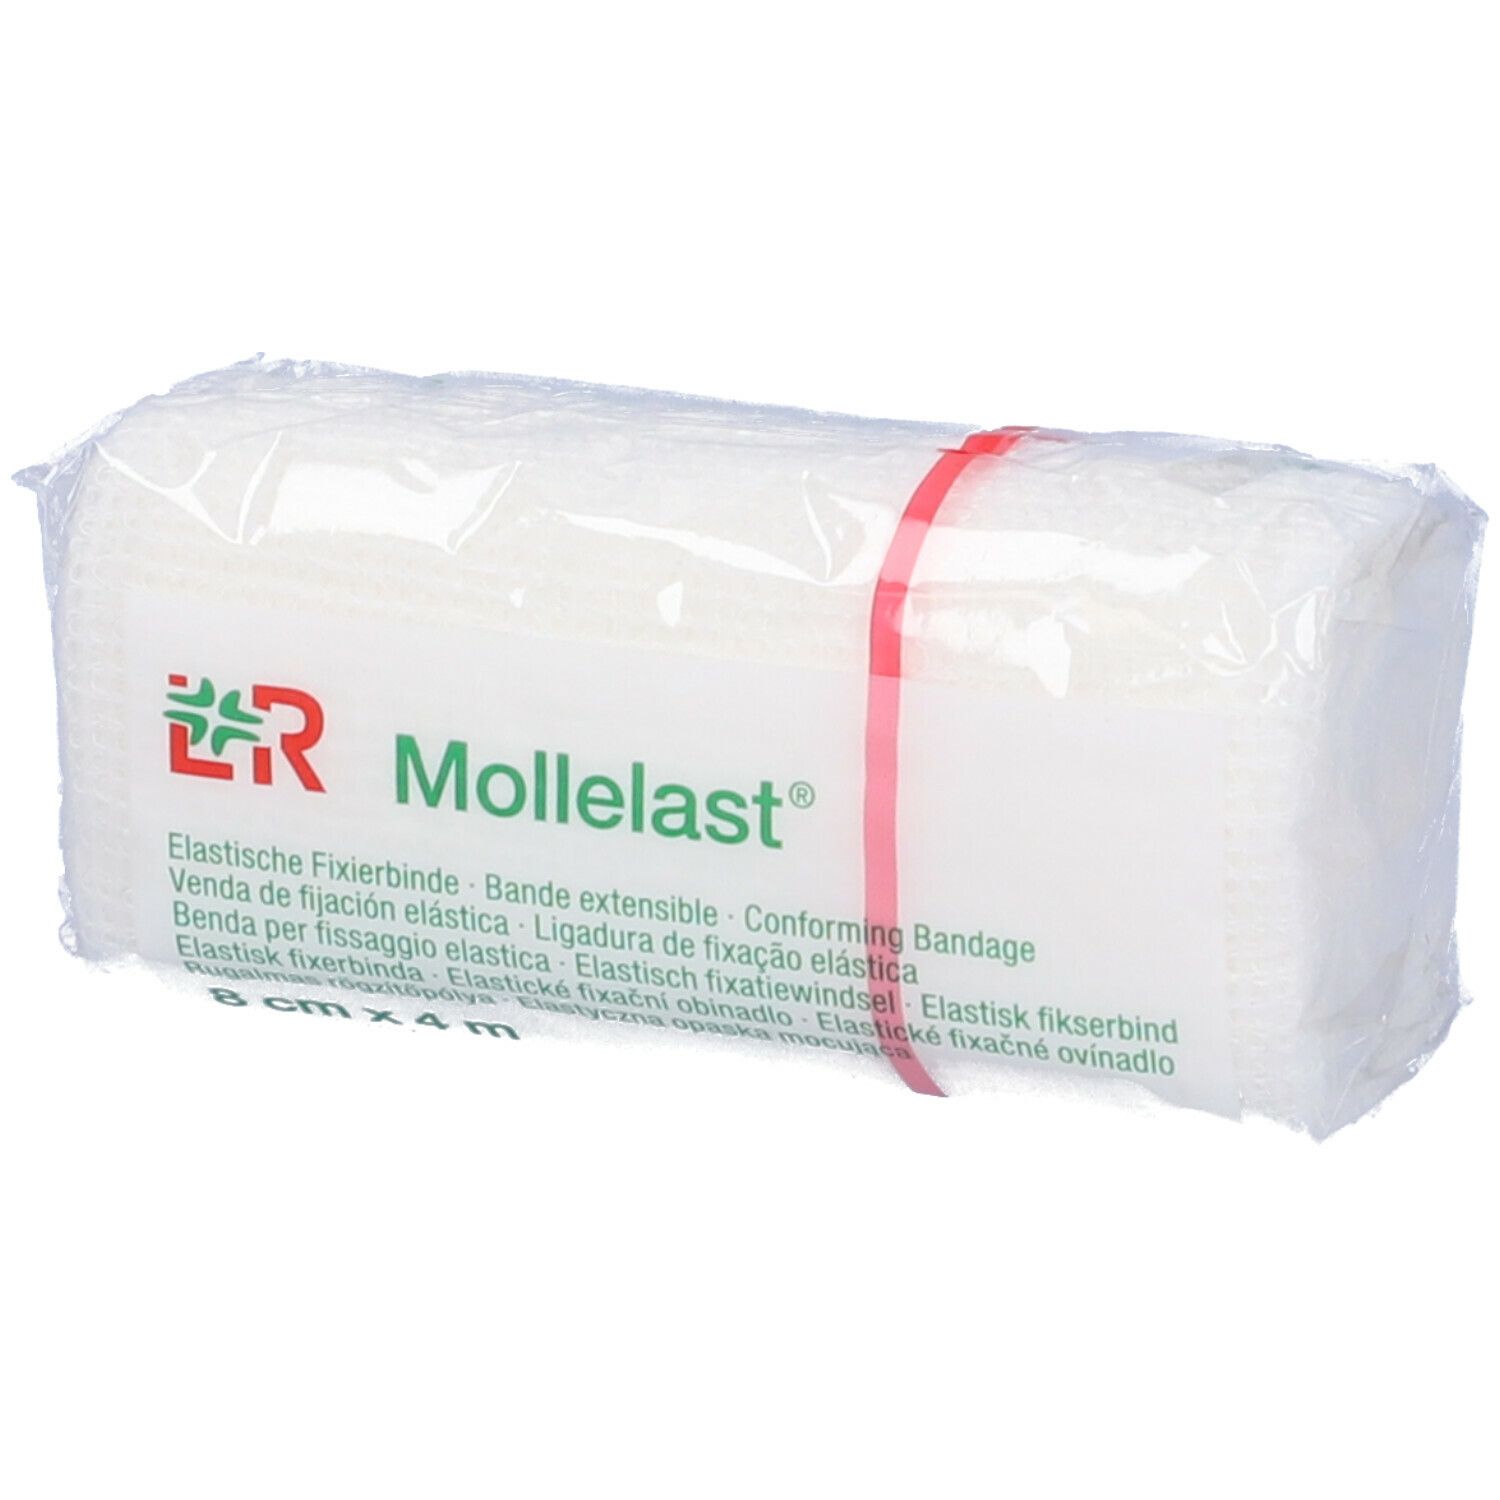 LR Mollelast Benda elastica di fissaggio 6 cm x 4 m